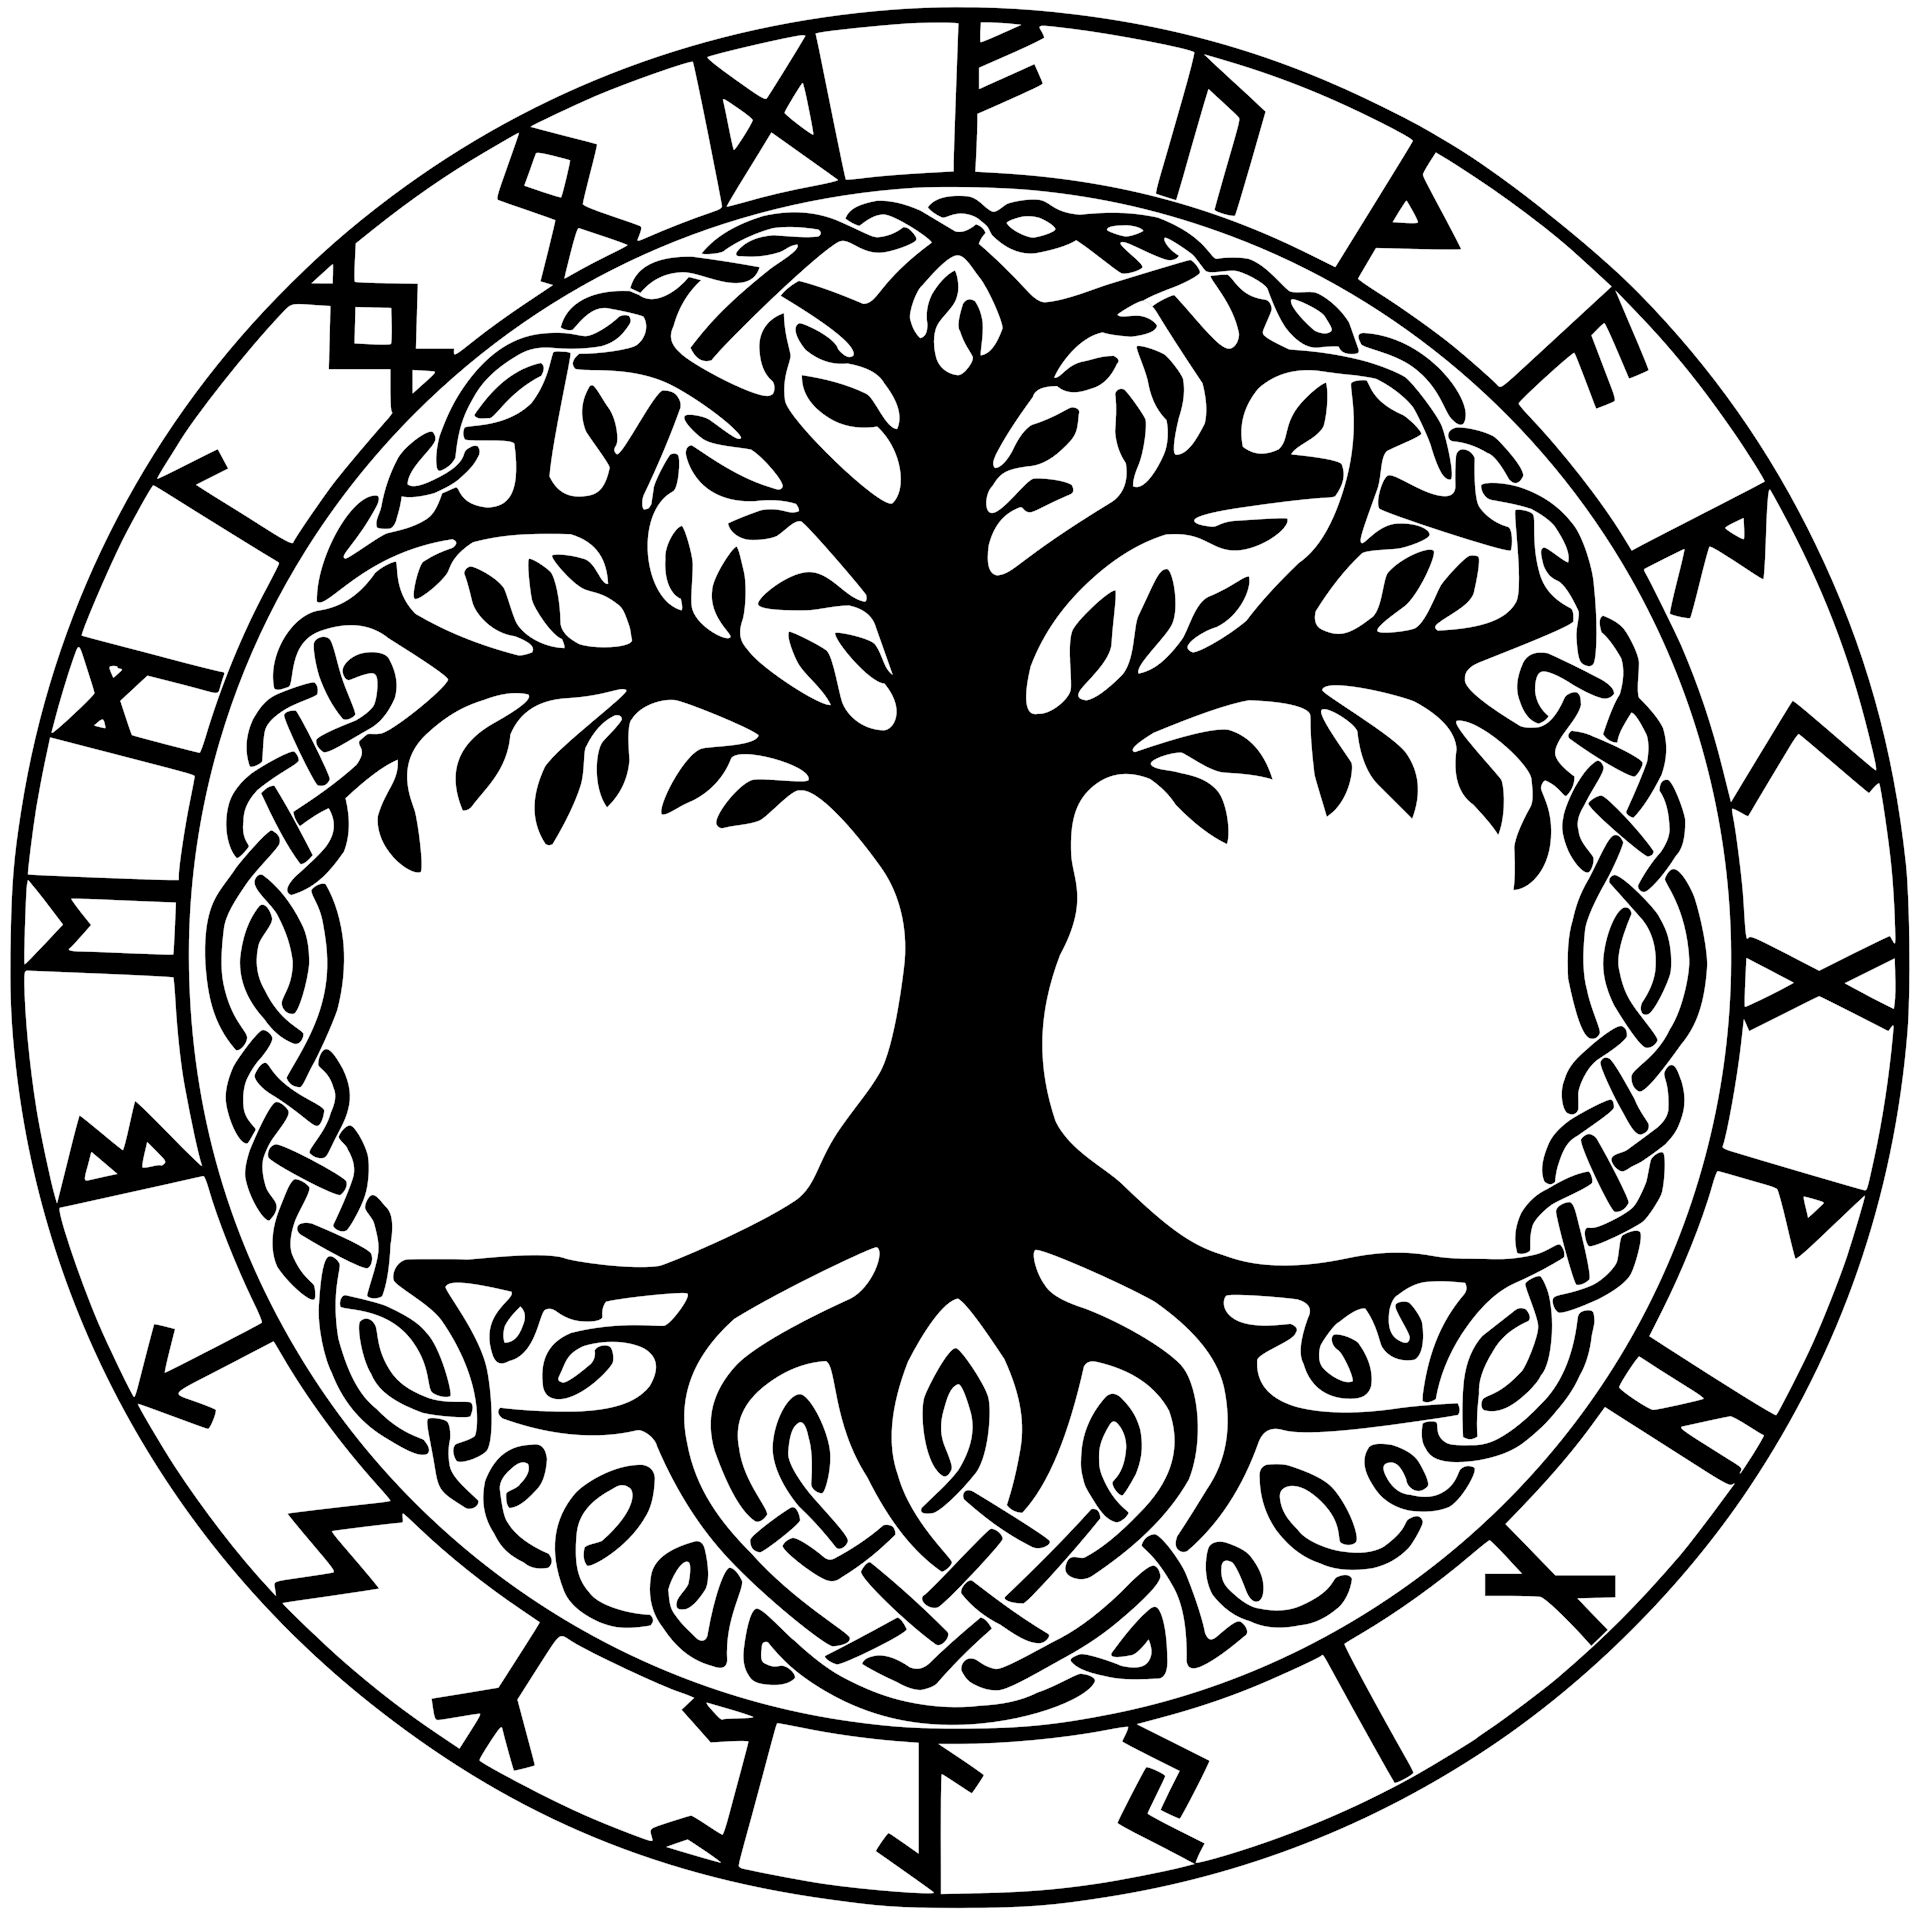 valknut tree of life meaning